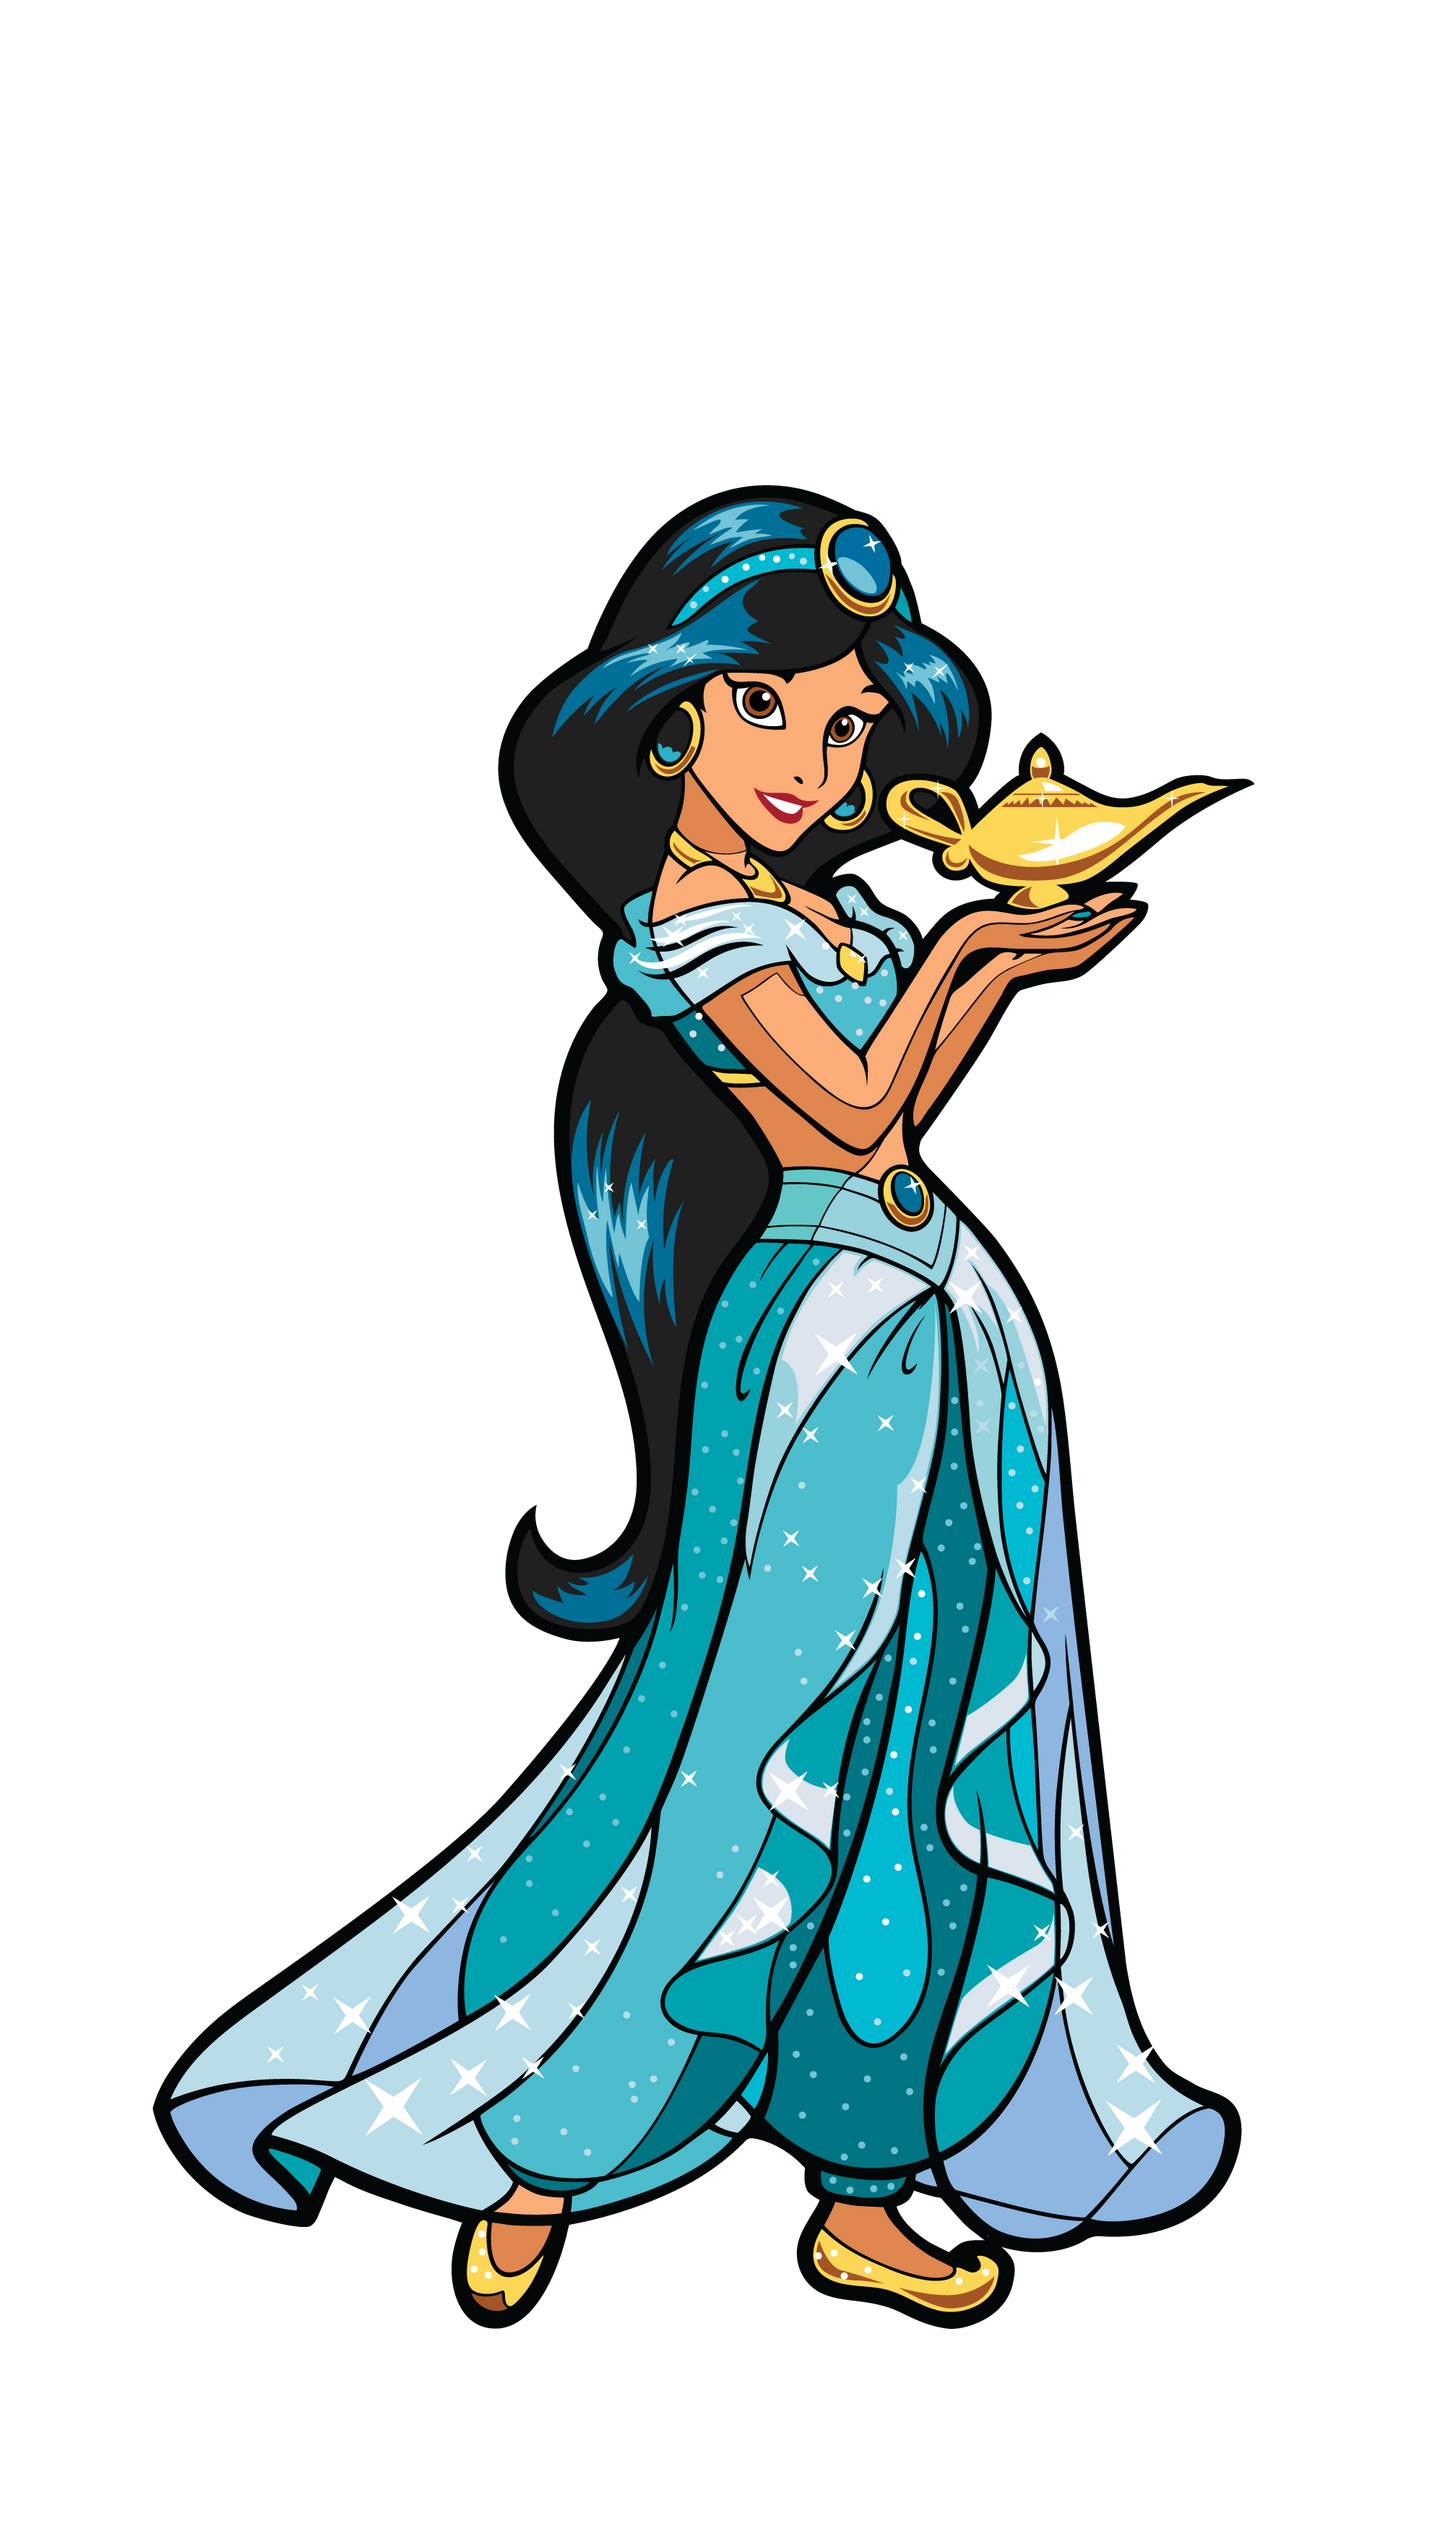 Load image into Gallery viewer, Jasmine (#227) Disney Aladdin FiGPiN
